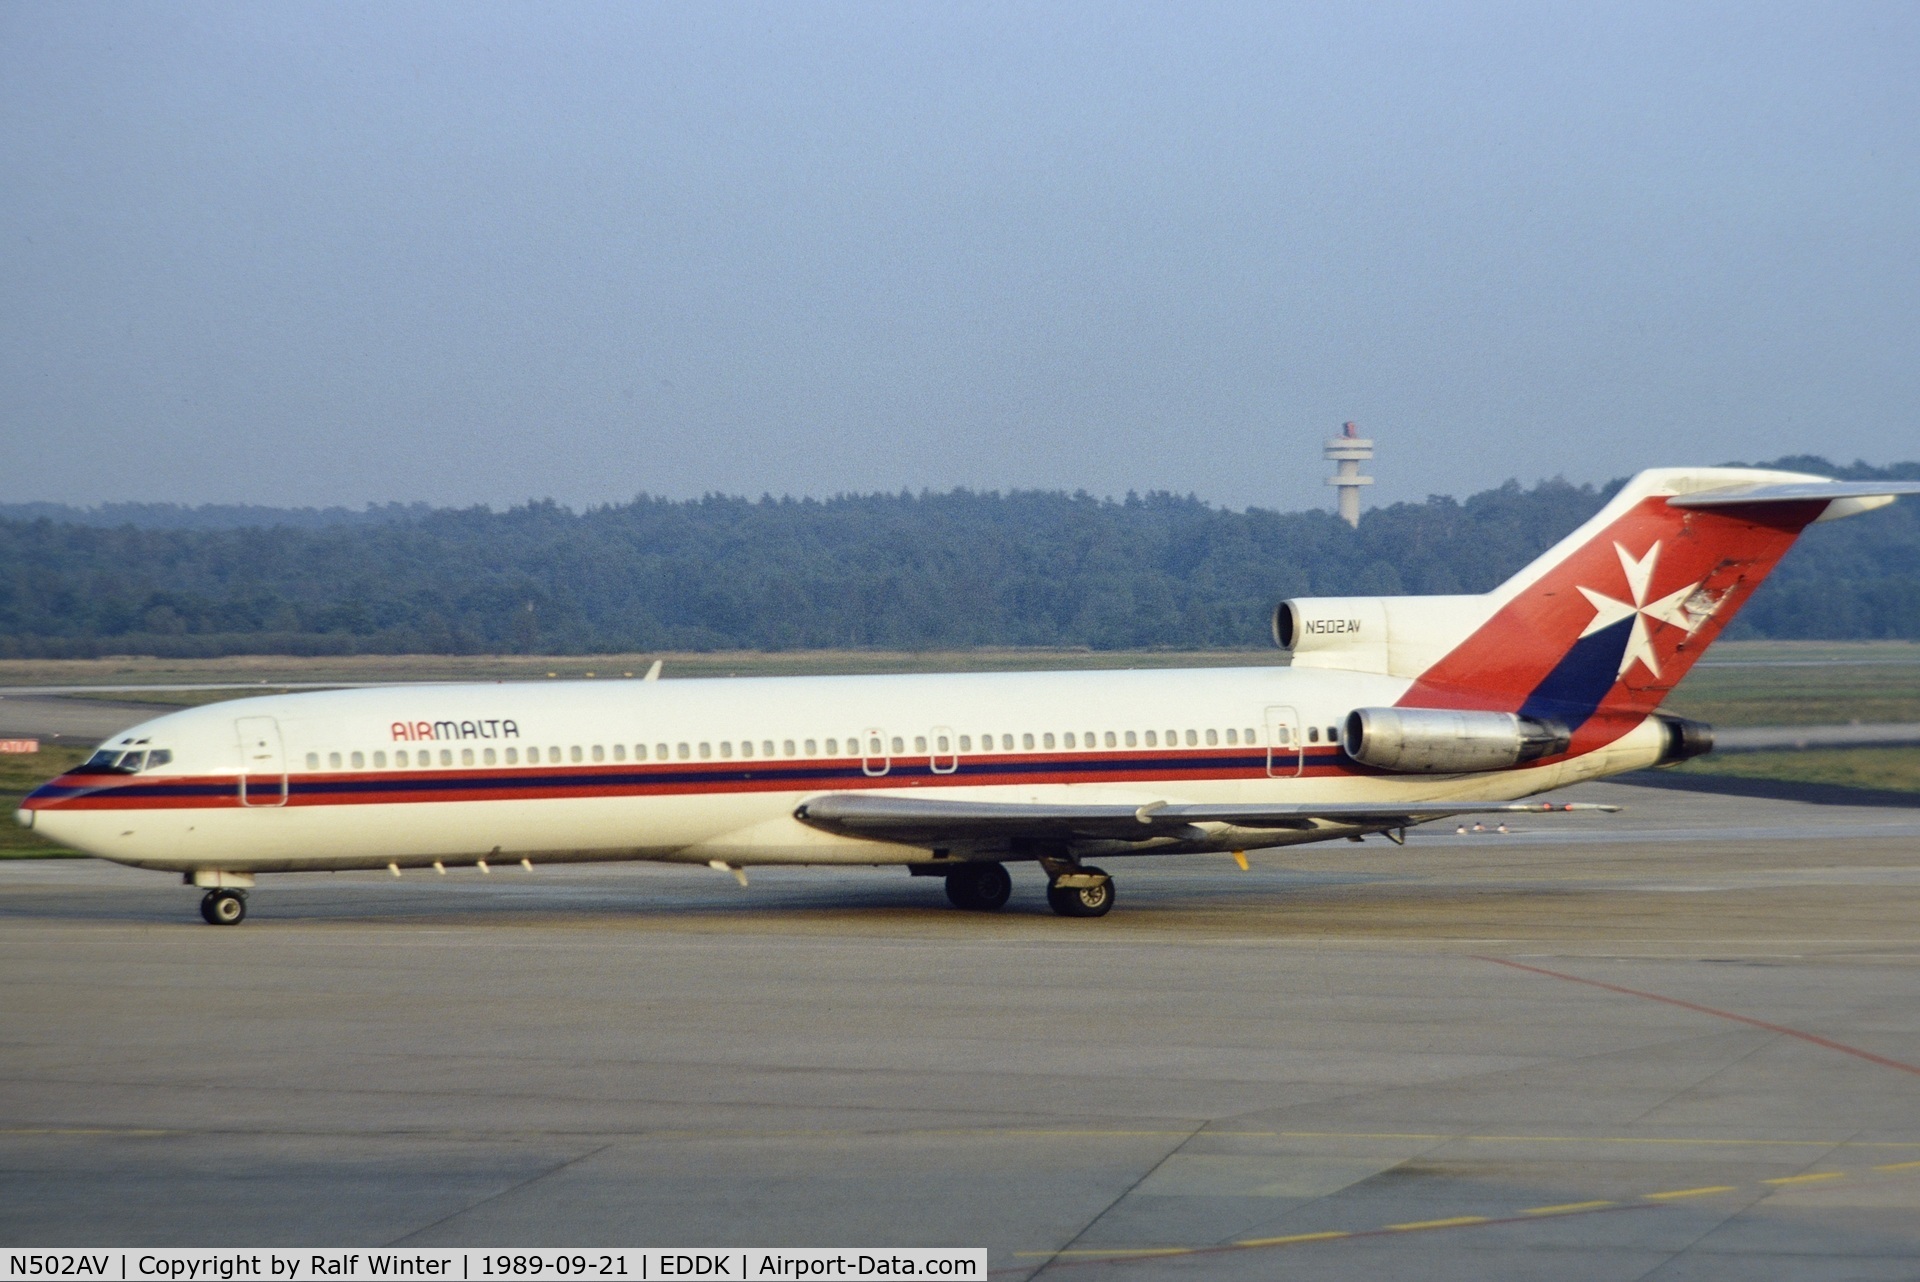 N502AV, 1972 Boeing 727-247 C/N 20580, Boeing 727-247 - KM AMC Air Malta - 20580 - N502AV - 21.09.1989 - CGN